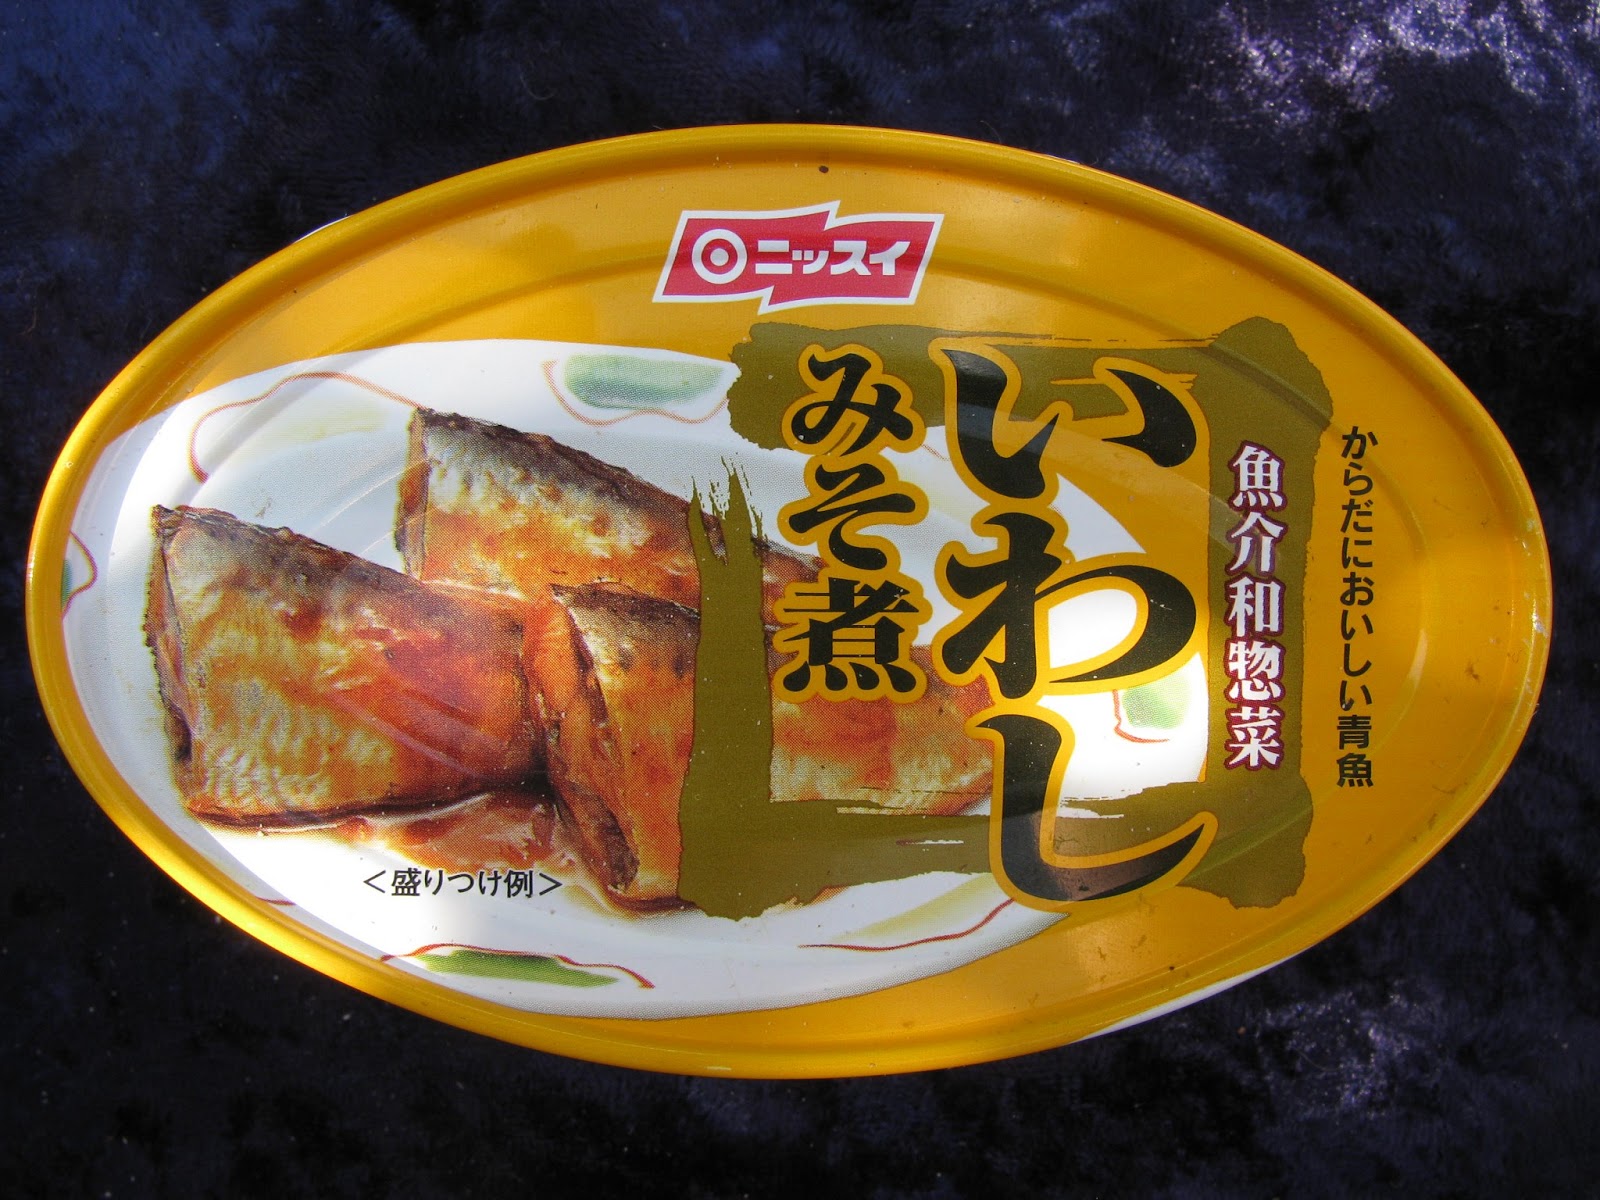 Nissui Sardines in Soybean Paste (Iwashi Misoni) - 100g/3.53oz